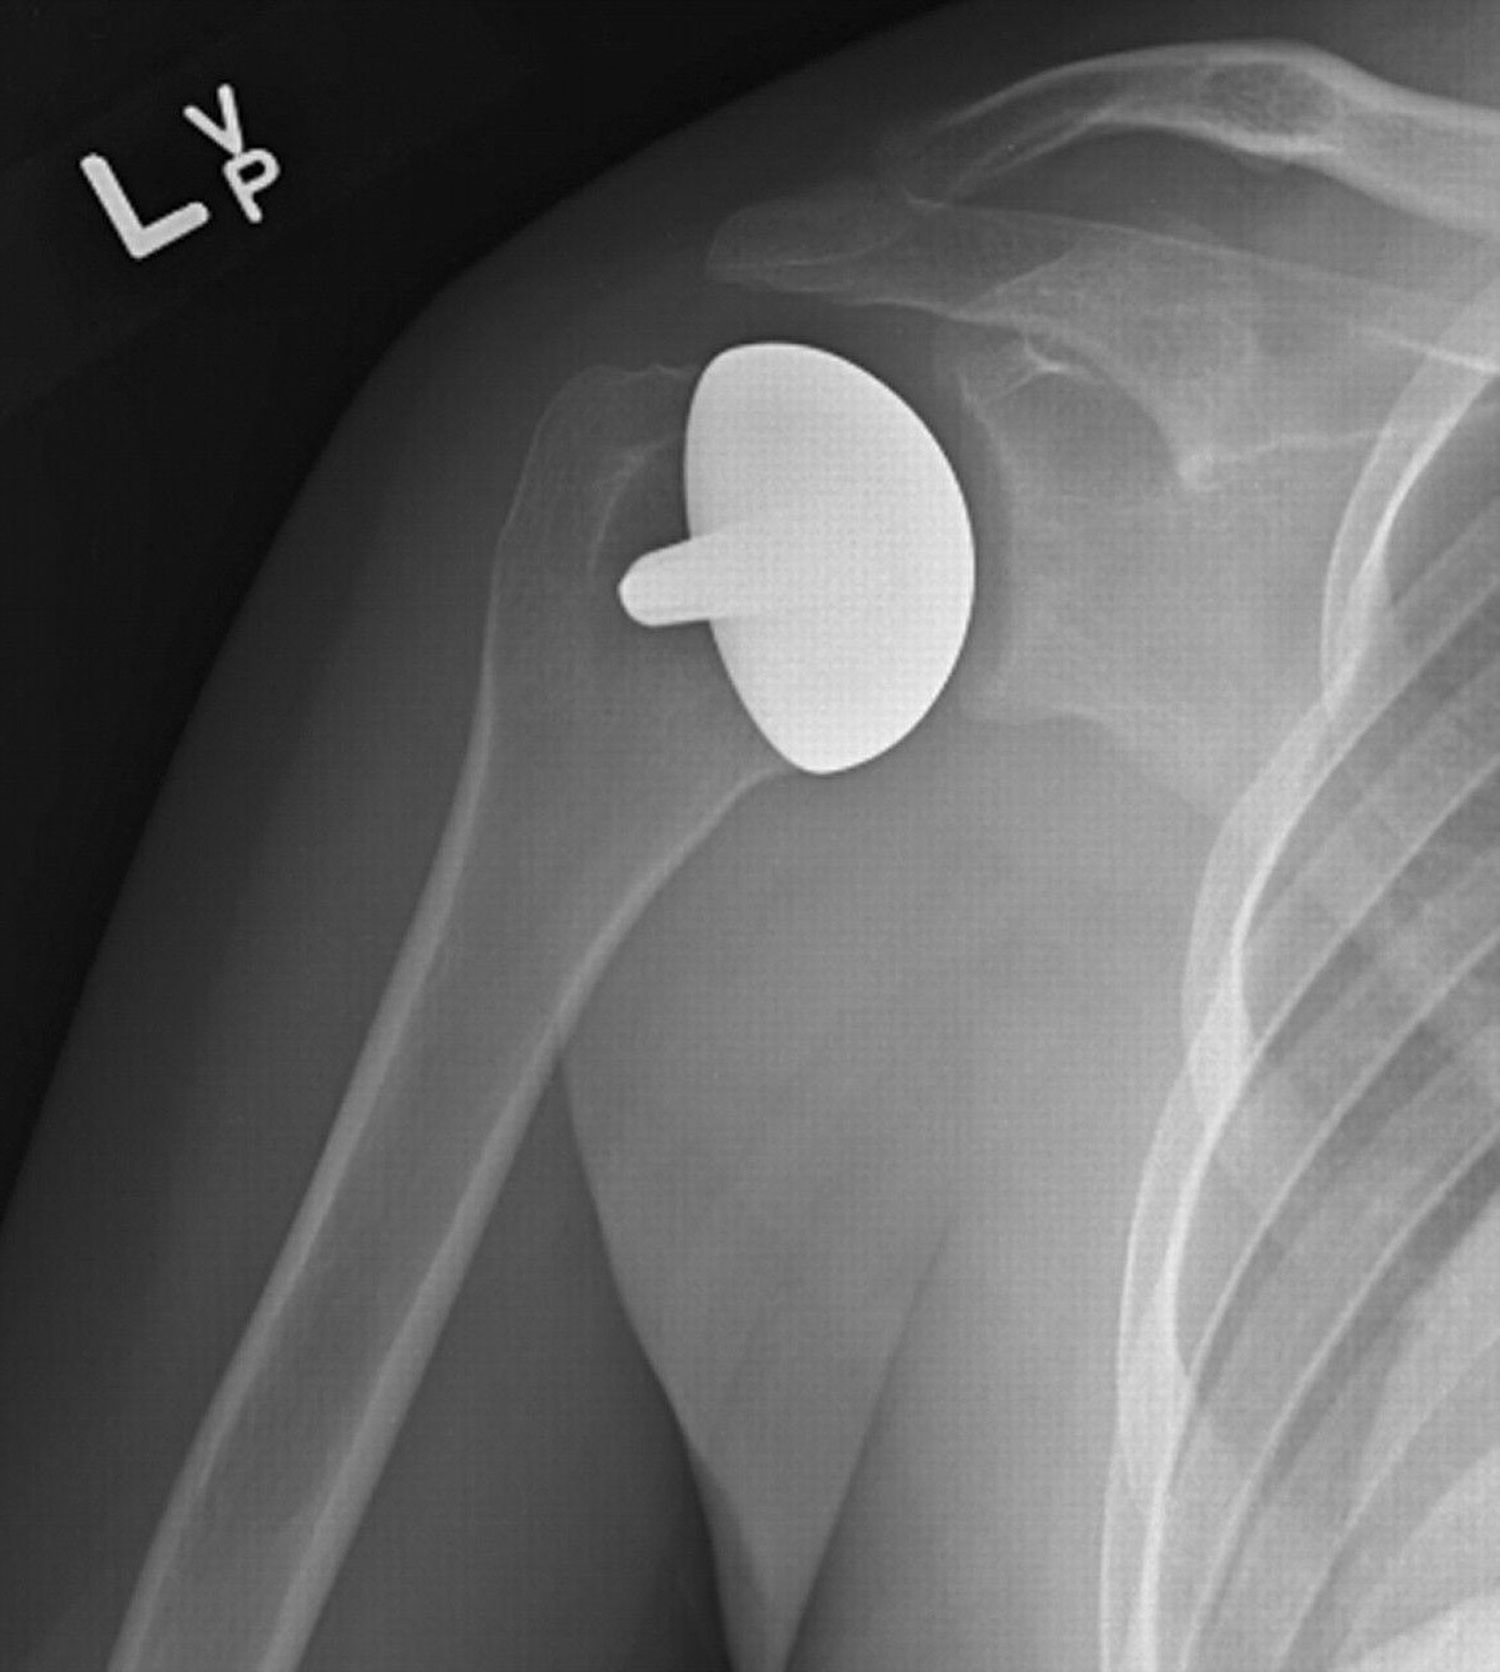  shoulder resurfacing arthroplasty